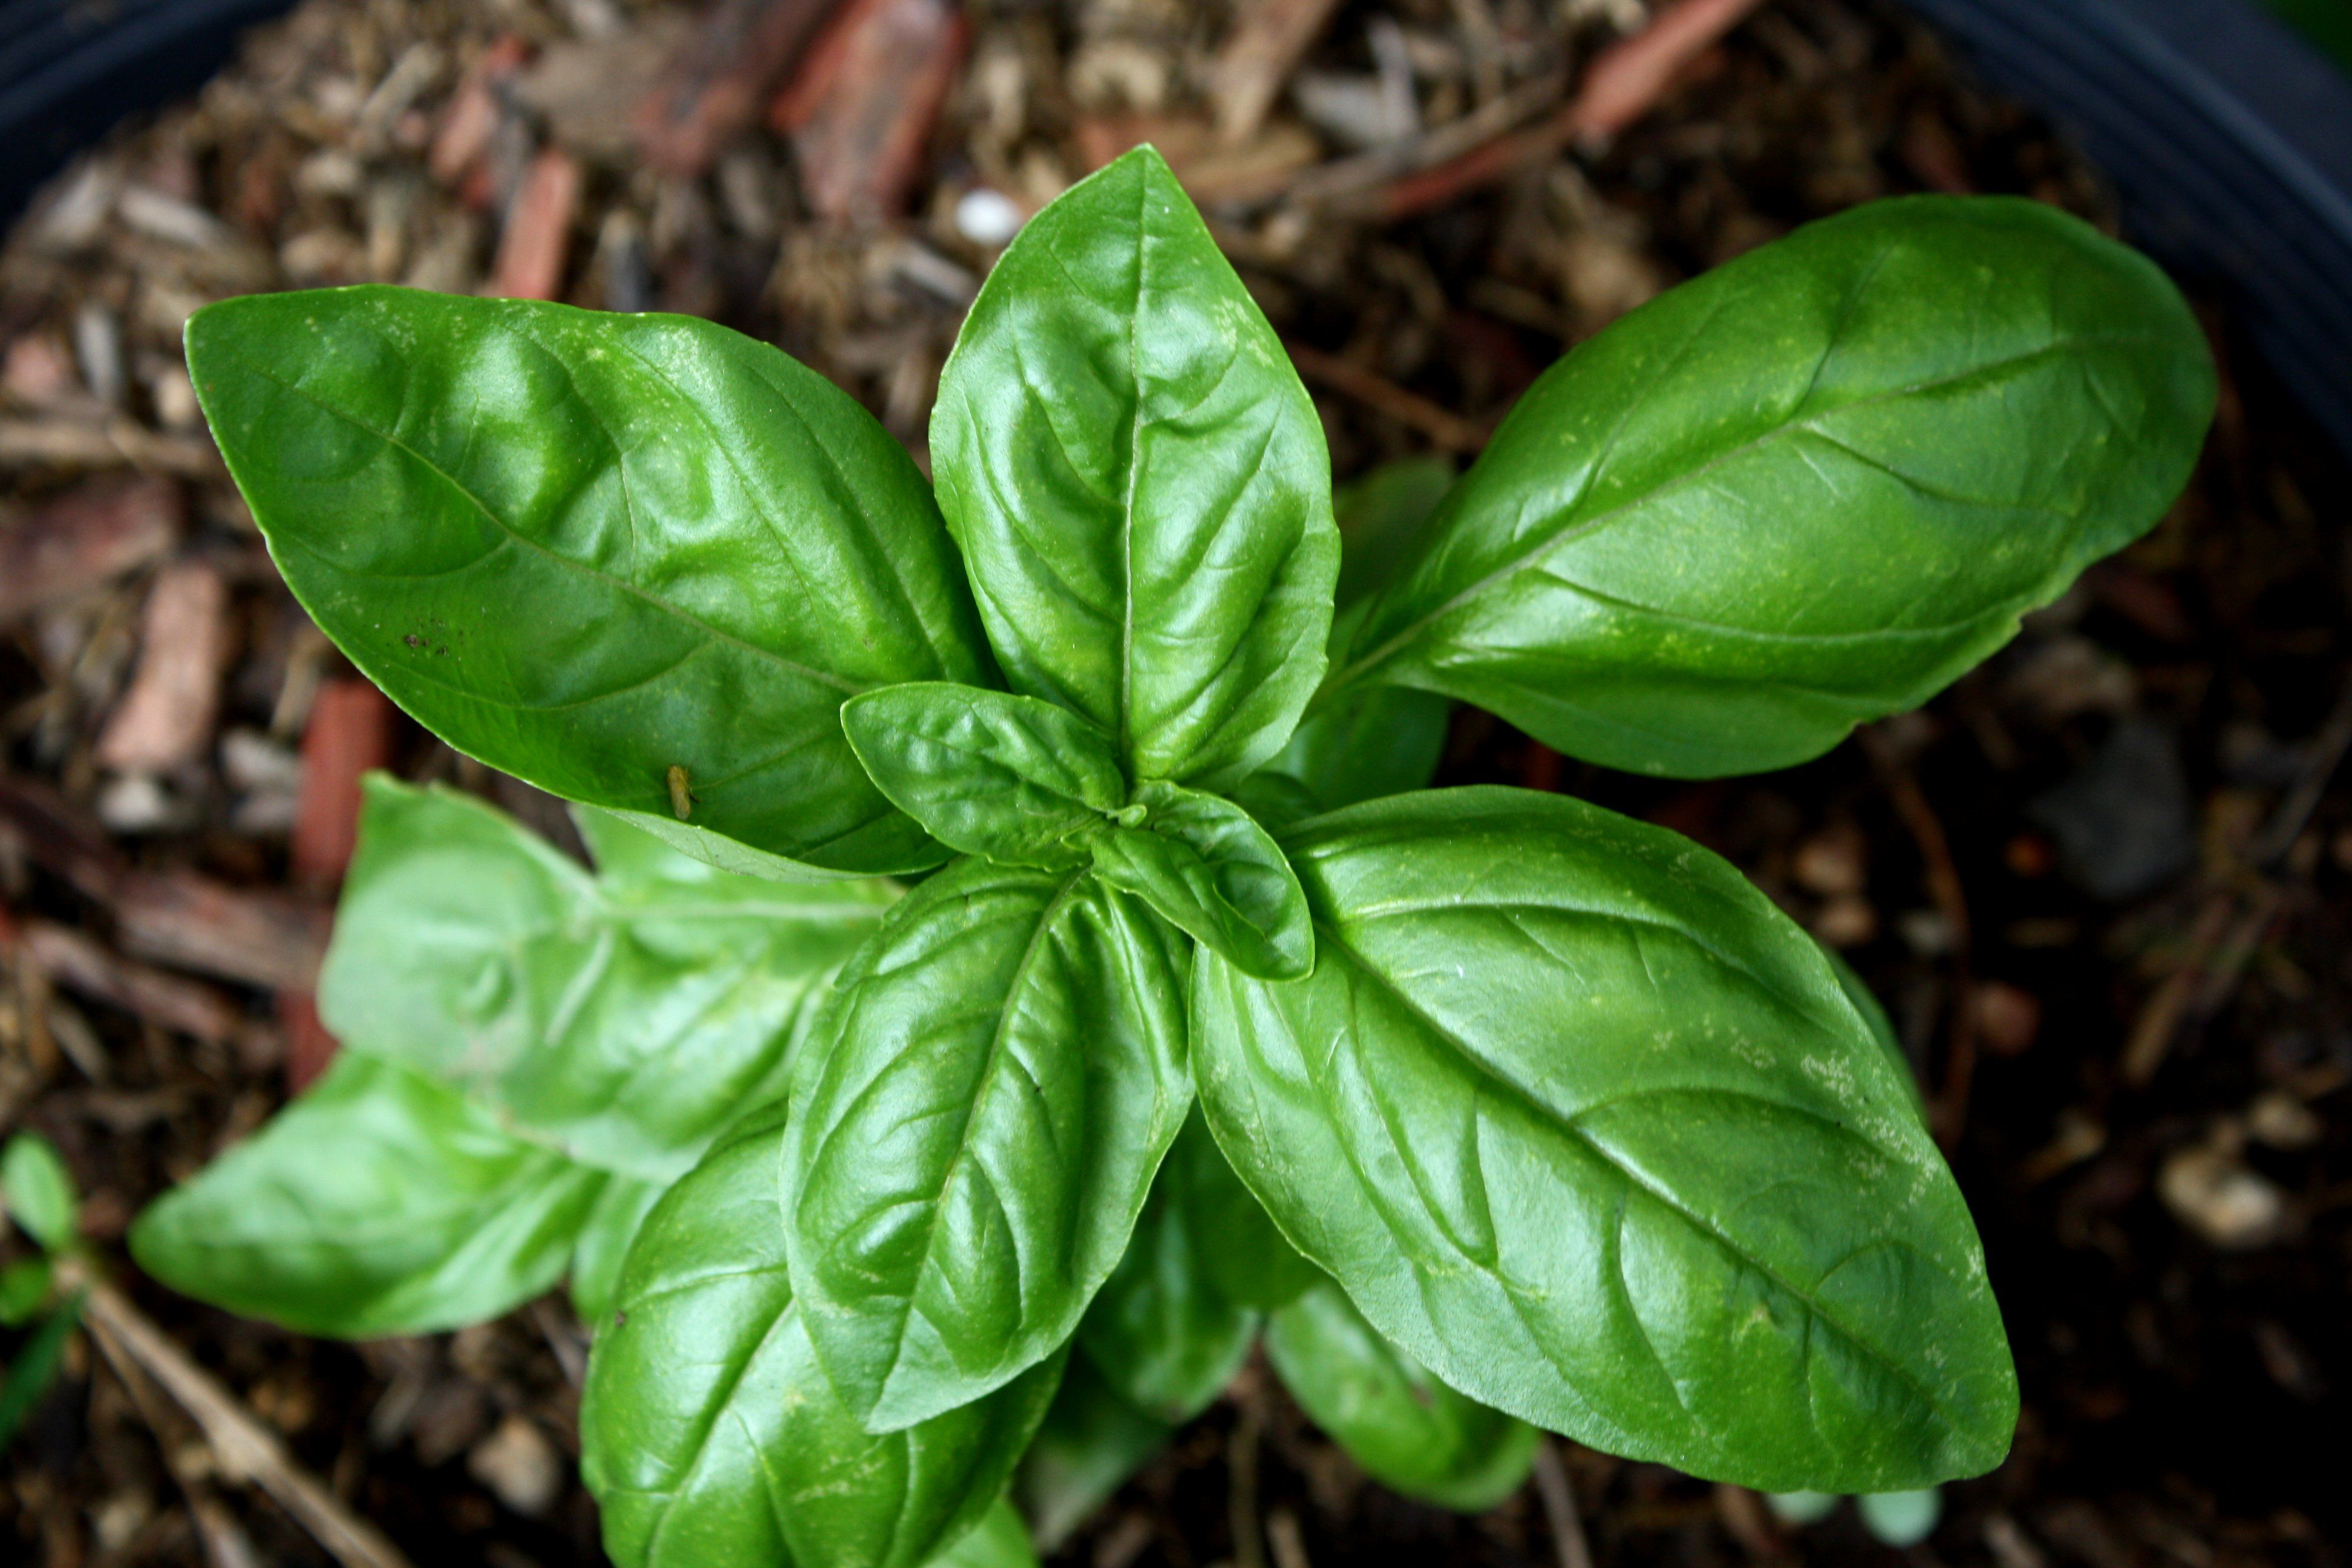 Sweet Basil Plant Picture. Free Photograph. Photo Public Domain